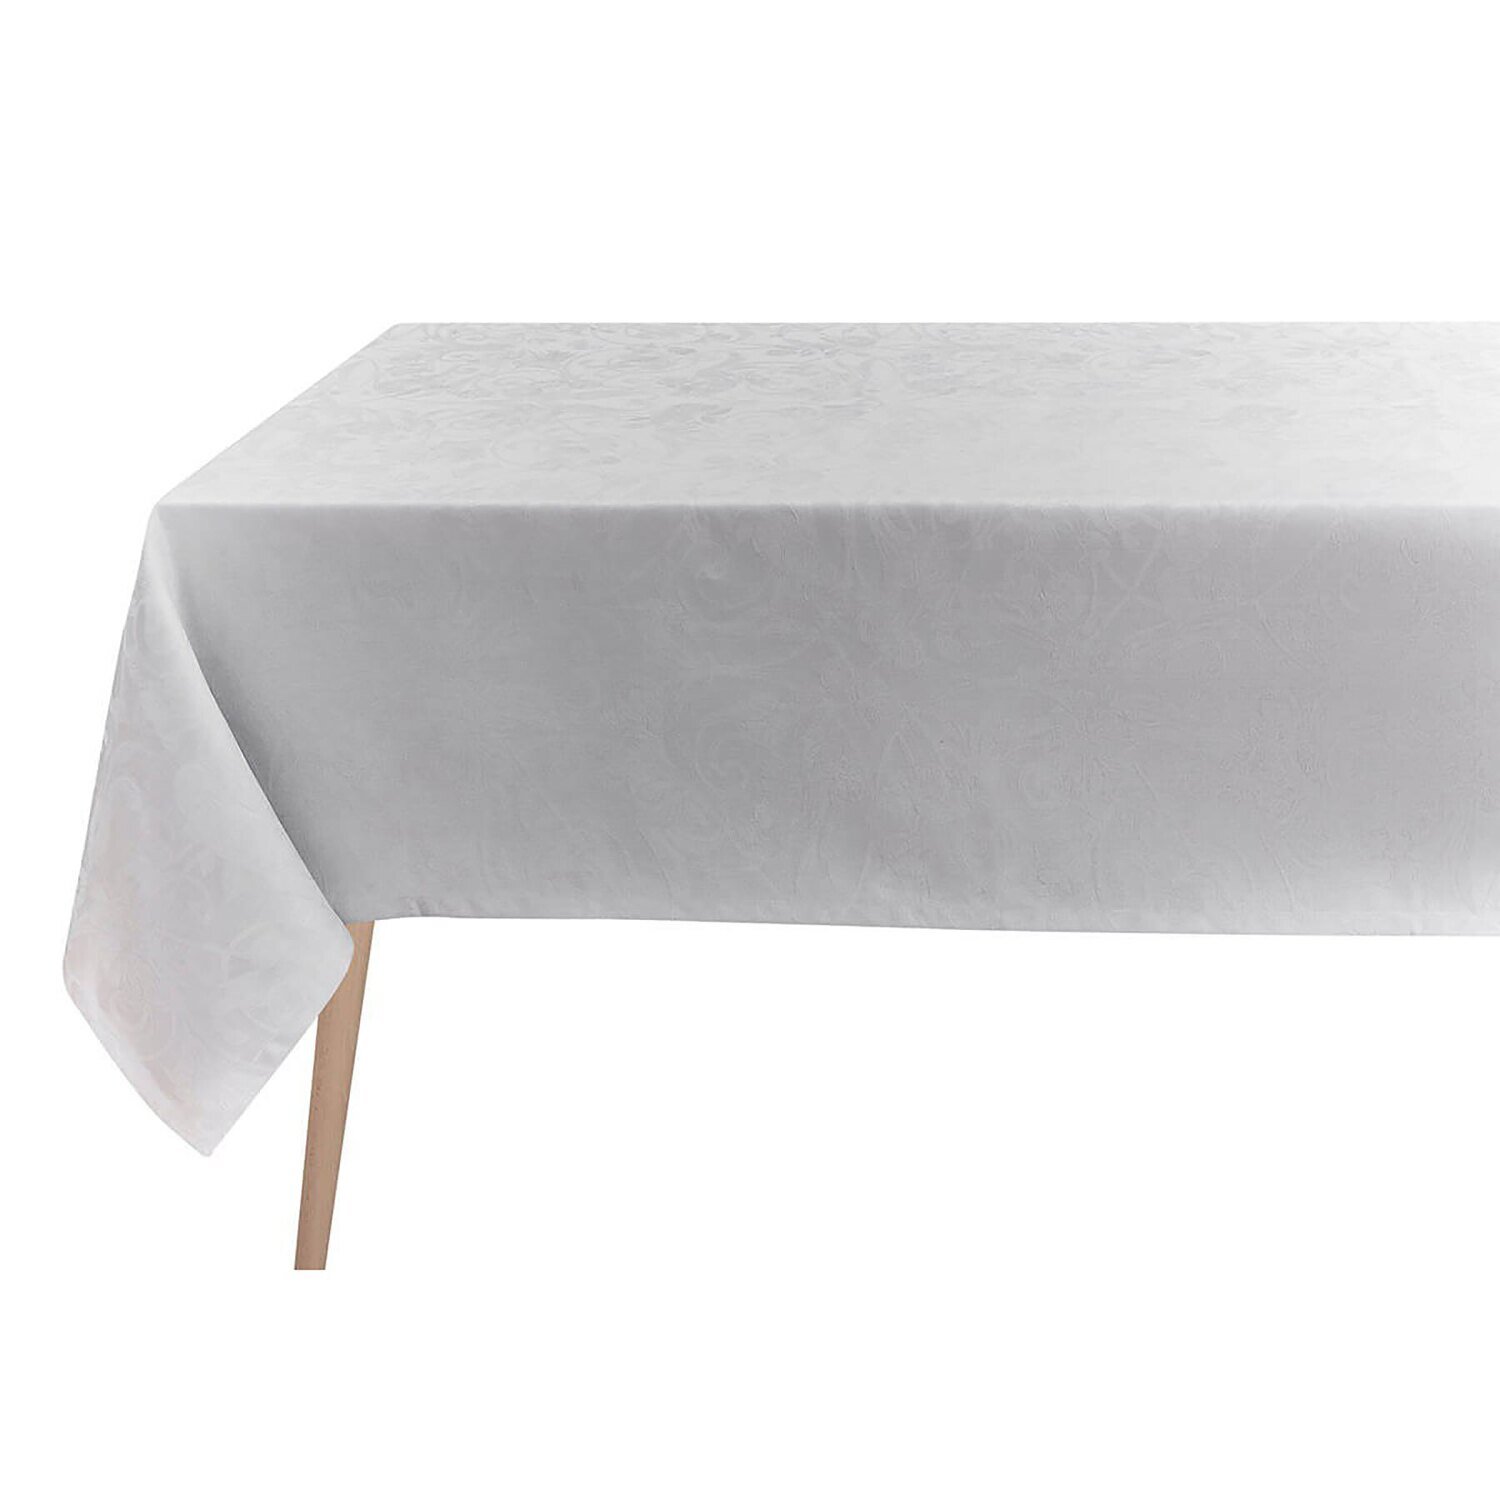 Le Jacquard Tablecloth Tivoli Pearl 175 x 320 100% Linen 26492